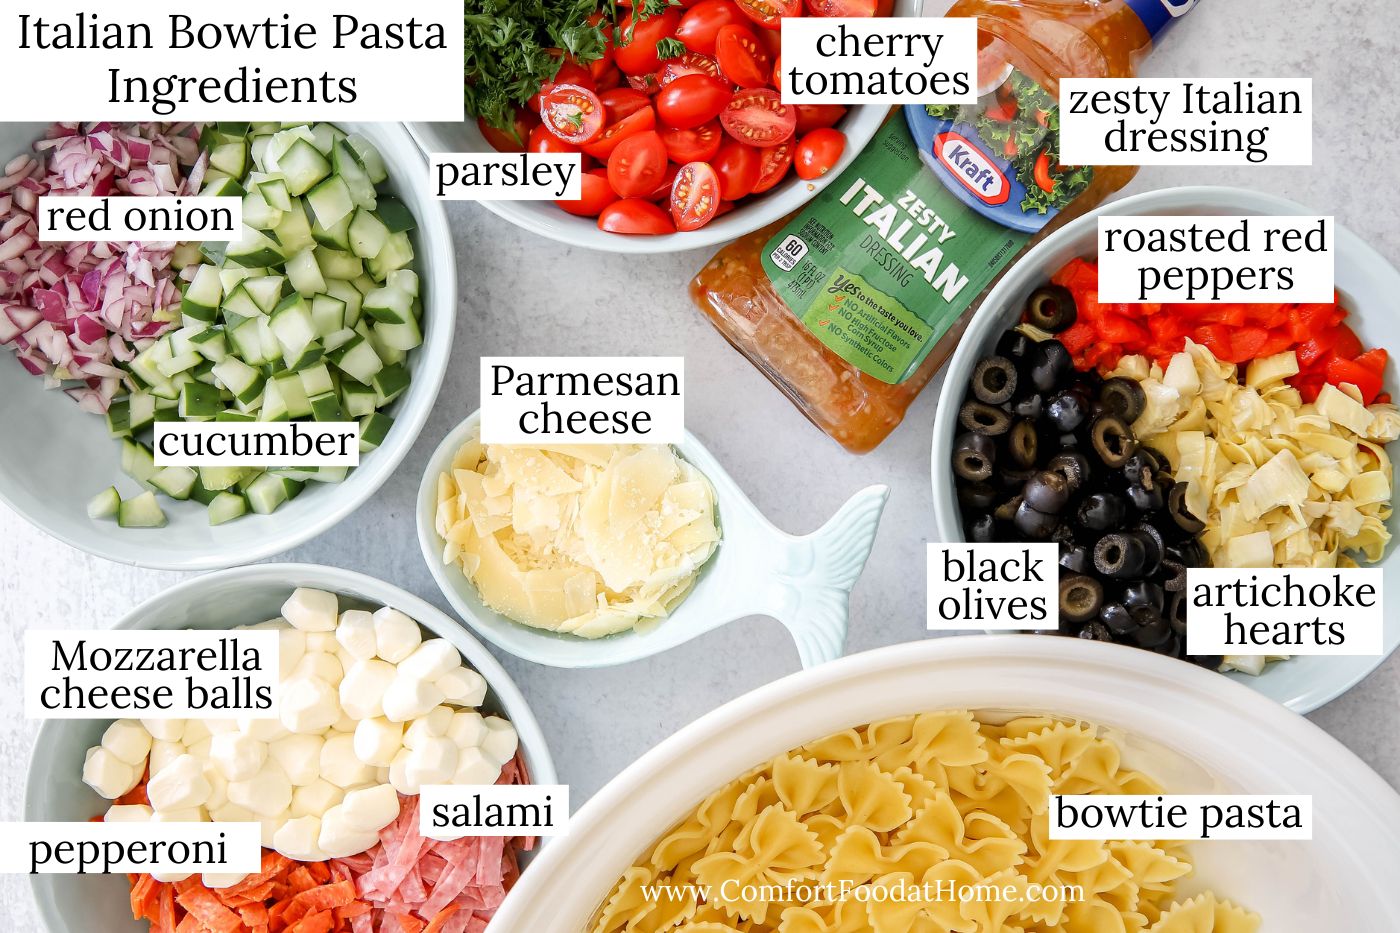 Italian bowtie pasta salad ingredients